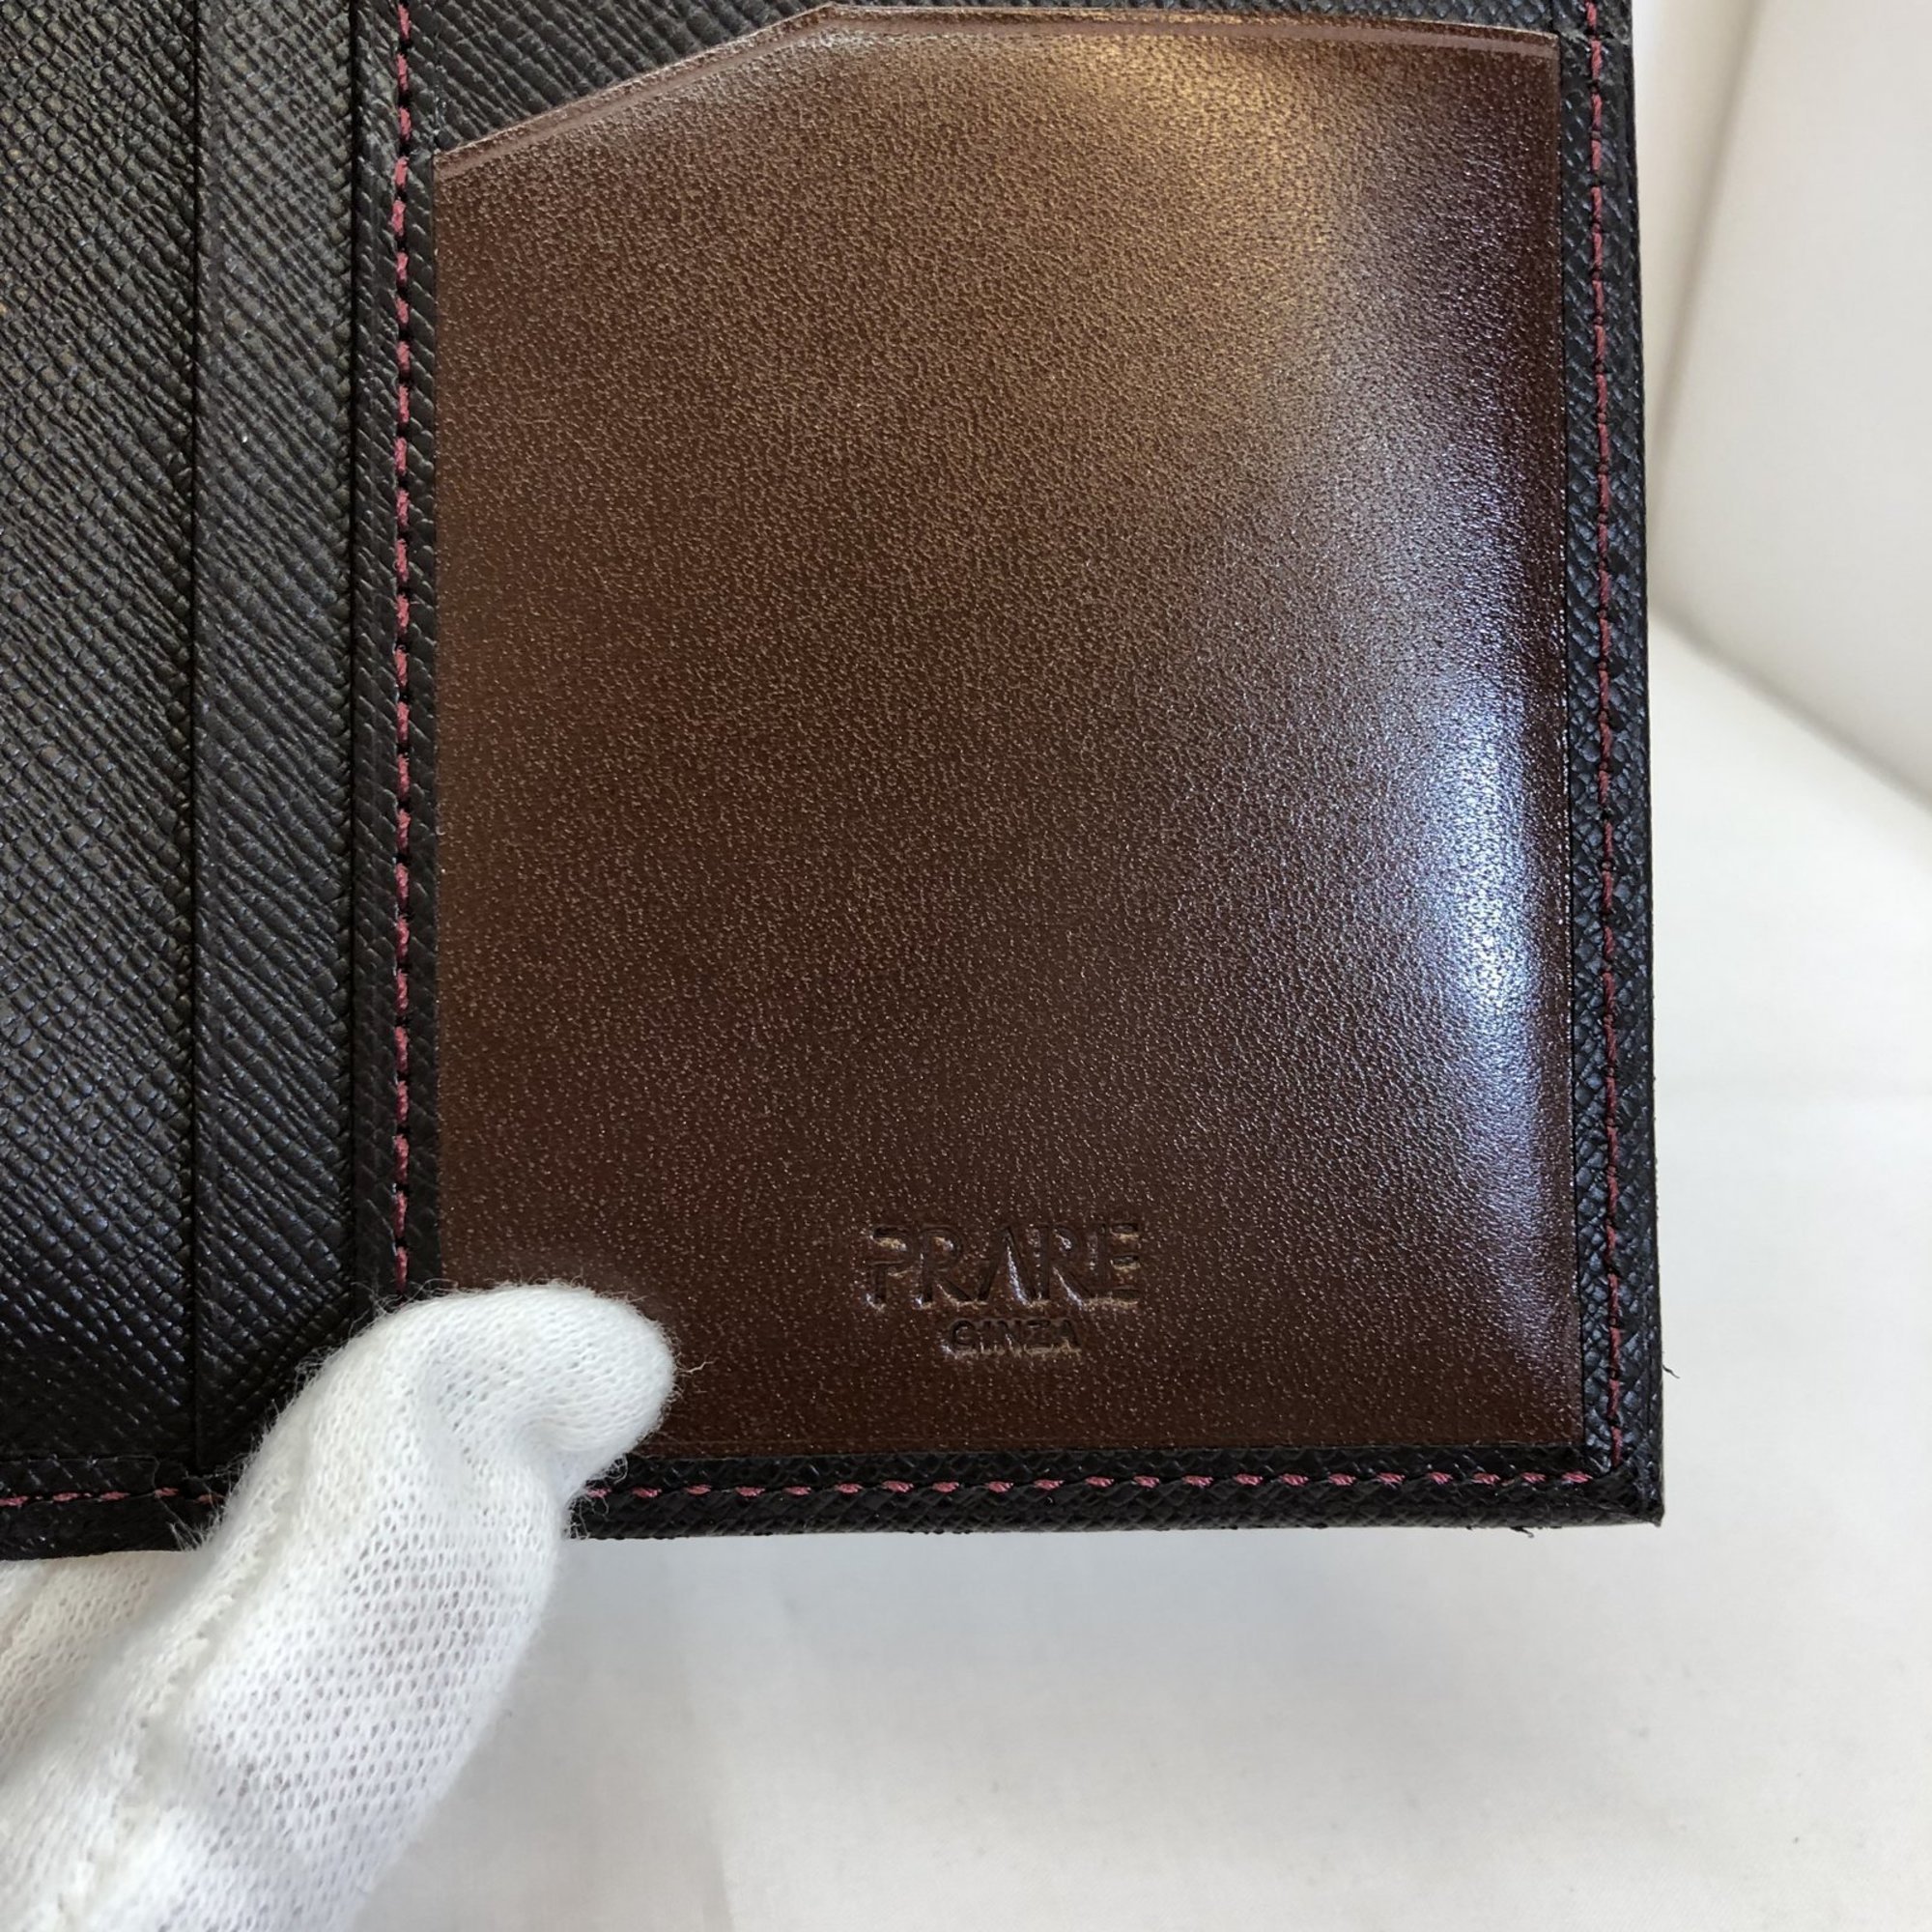 PRAIRIE GINZA Bi-fold long wallet Dark brown Stitch NP75617 Embossed leather Long Men's Mikunigaoka store ITW4T4JDVM2Y RH11775M